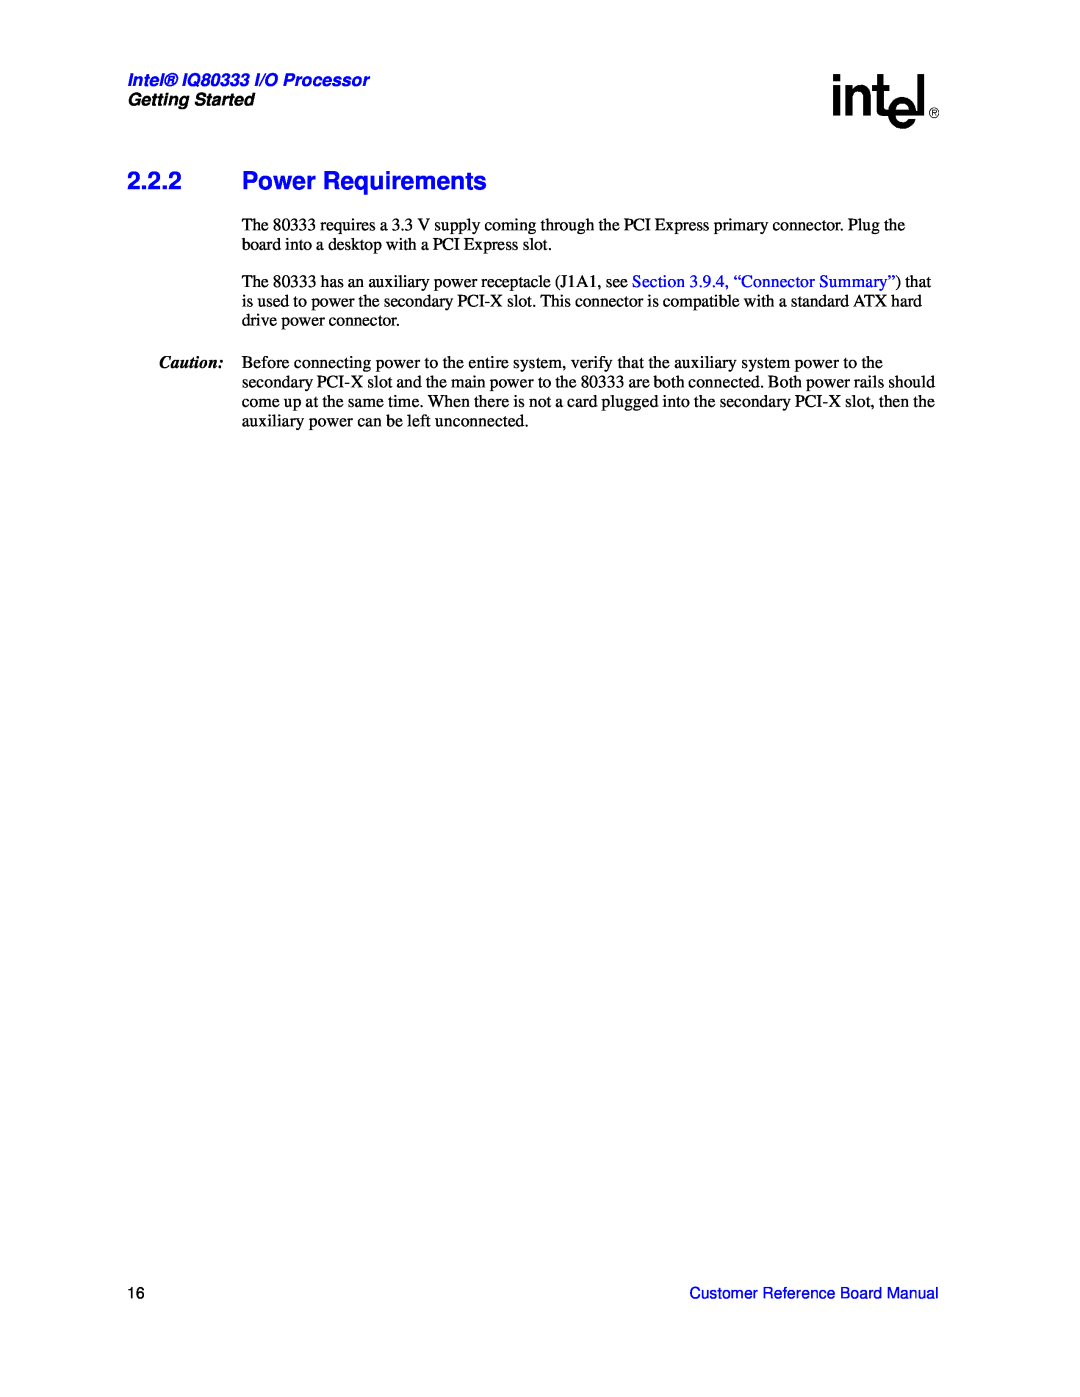 Intel manual 2.2.2Power Requirements, Getting Started, Intel IQ80333 I/O Processor 